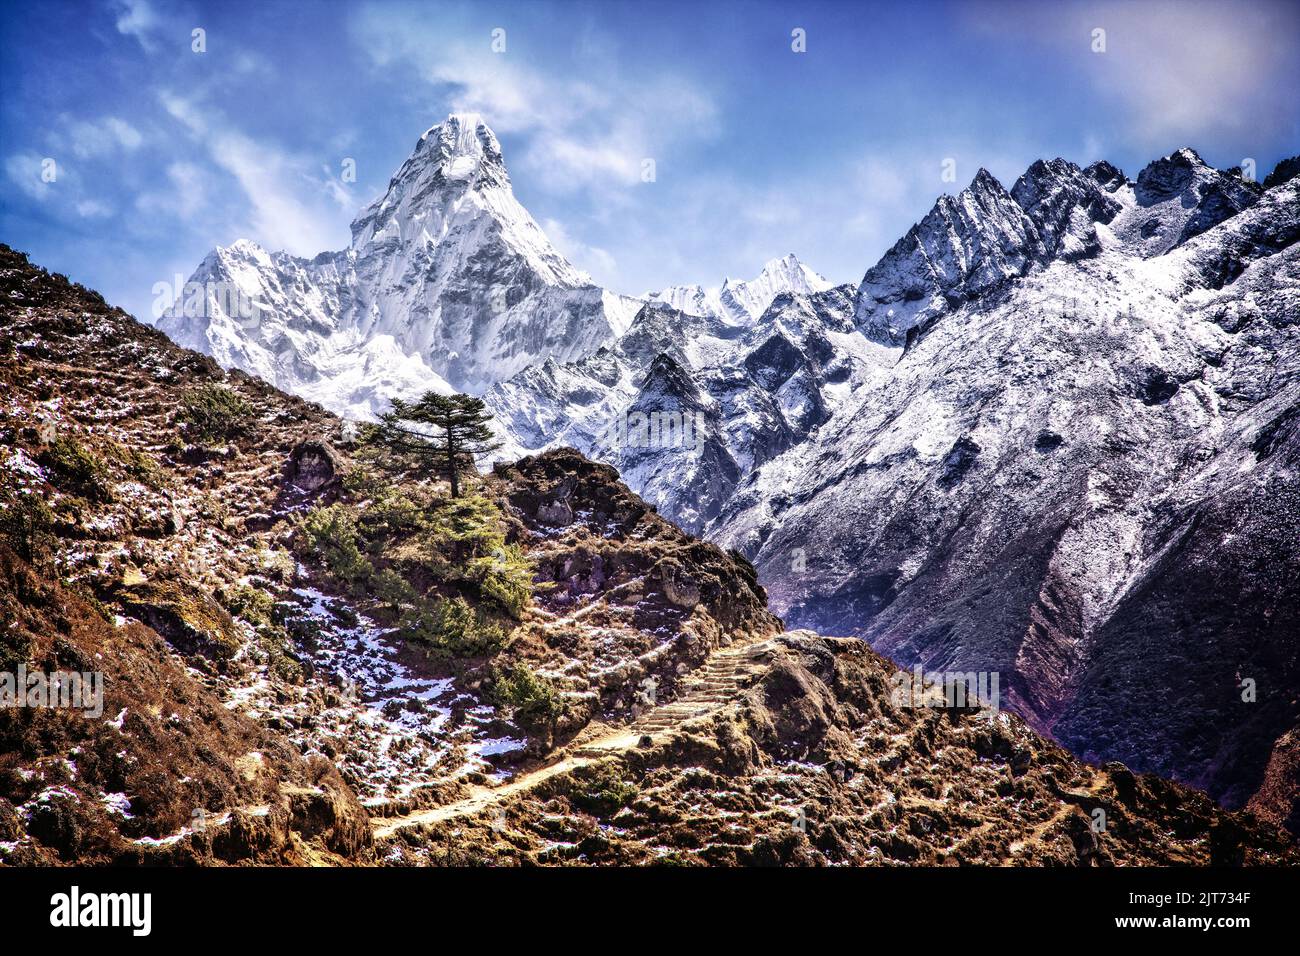 Ama Dablam (6856 meters) dominates the skyline along the trail into the high Himalaya.  Sagarmatha National Park, Nepal. Stock Photo